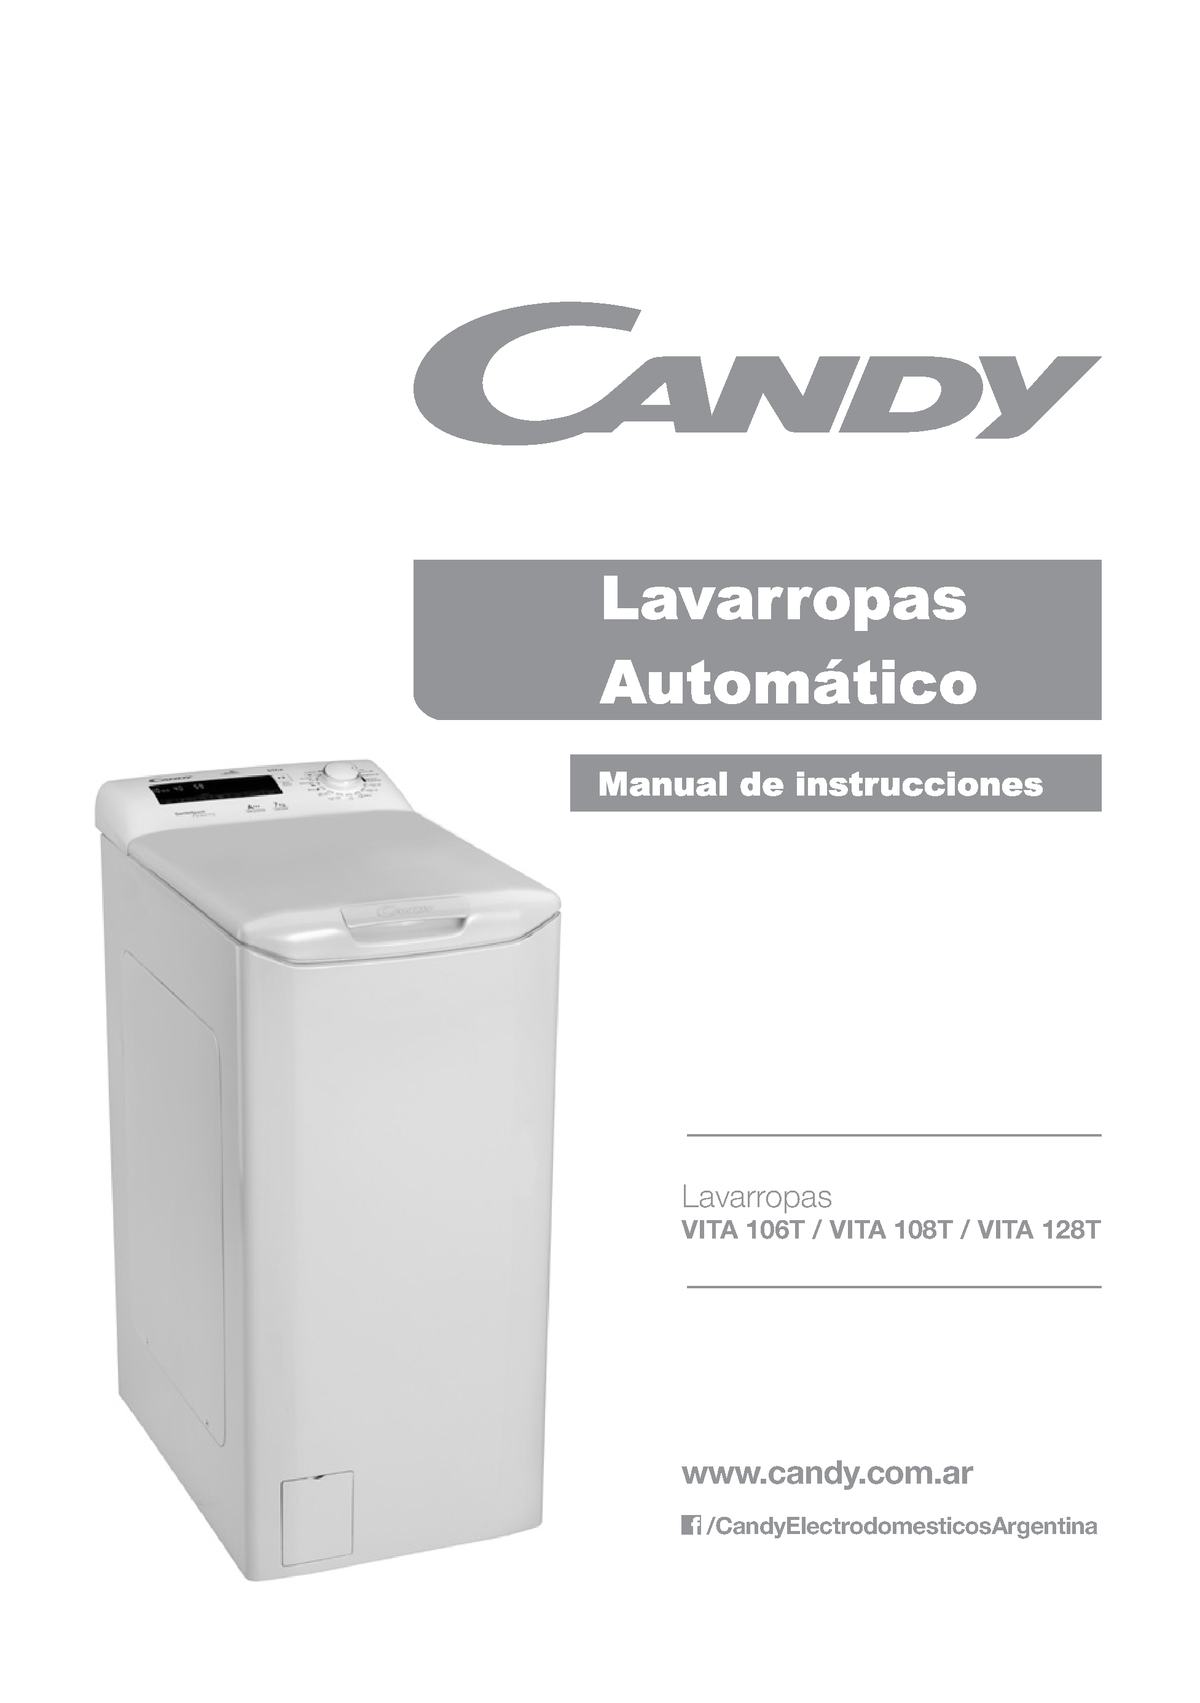 108t - Claro rey - Lavarropas VITA 106T / VITA 108T / 128T candy.com - Studocu